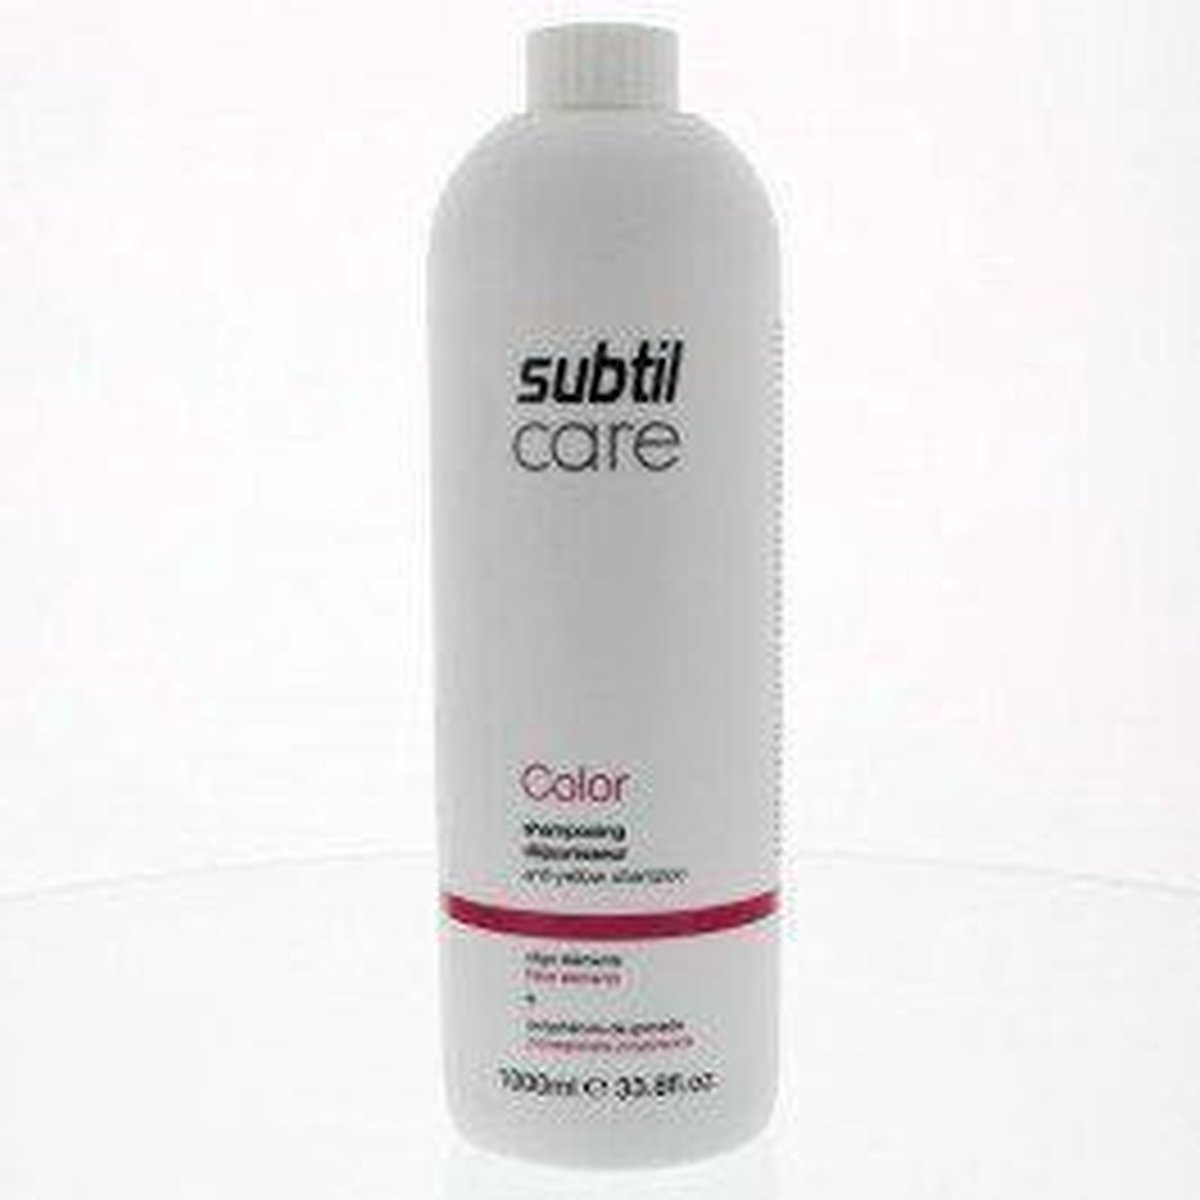 Subtil Care Color Dejaunisseur - 1000 ml - Shampoo